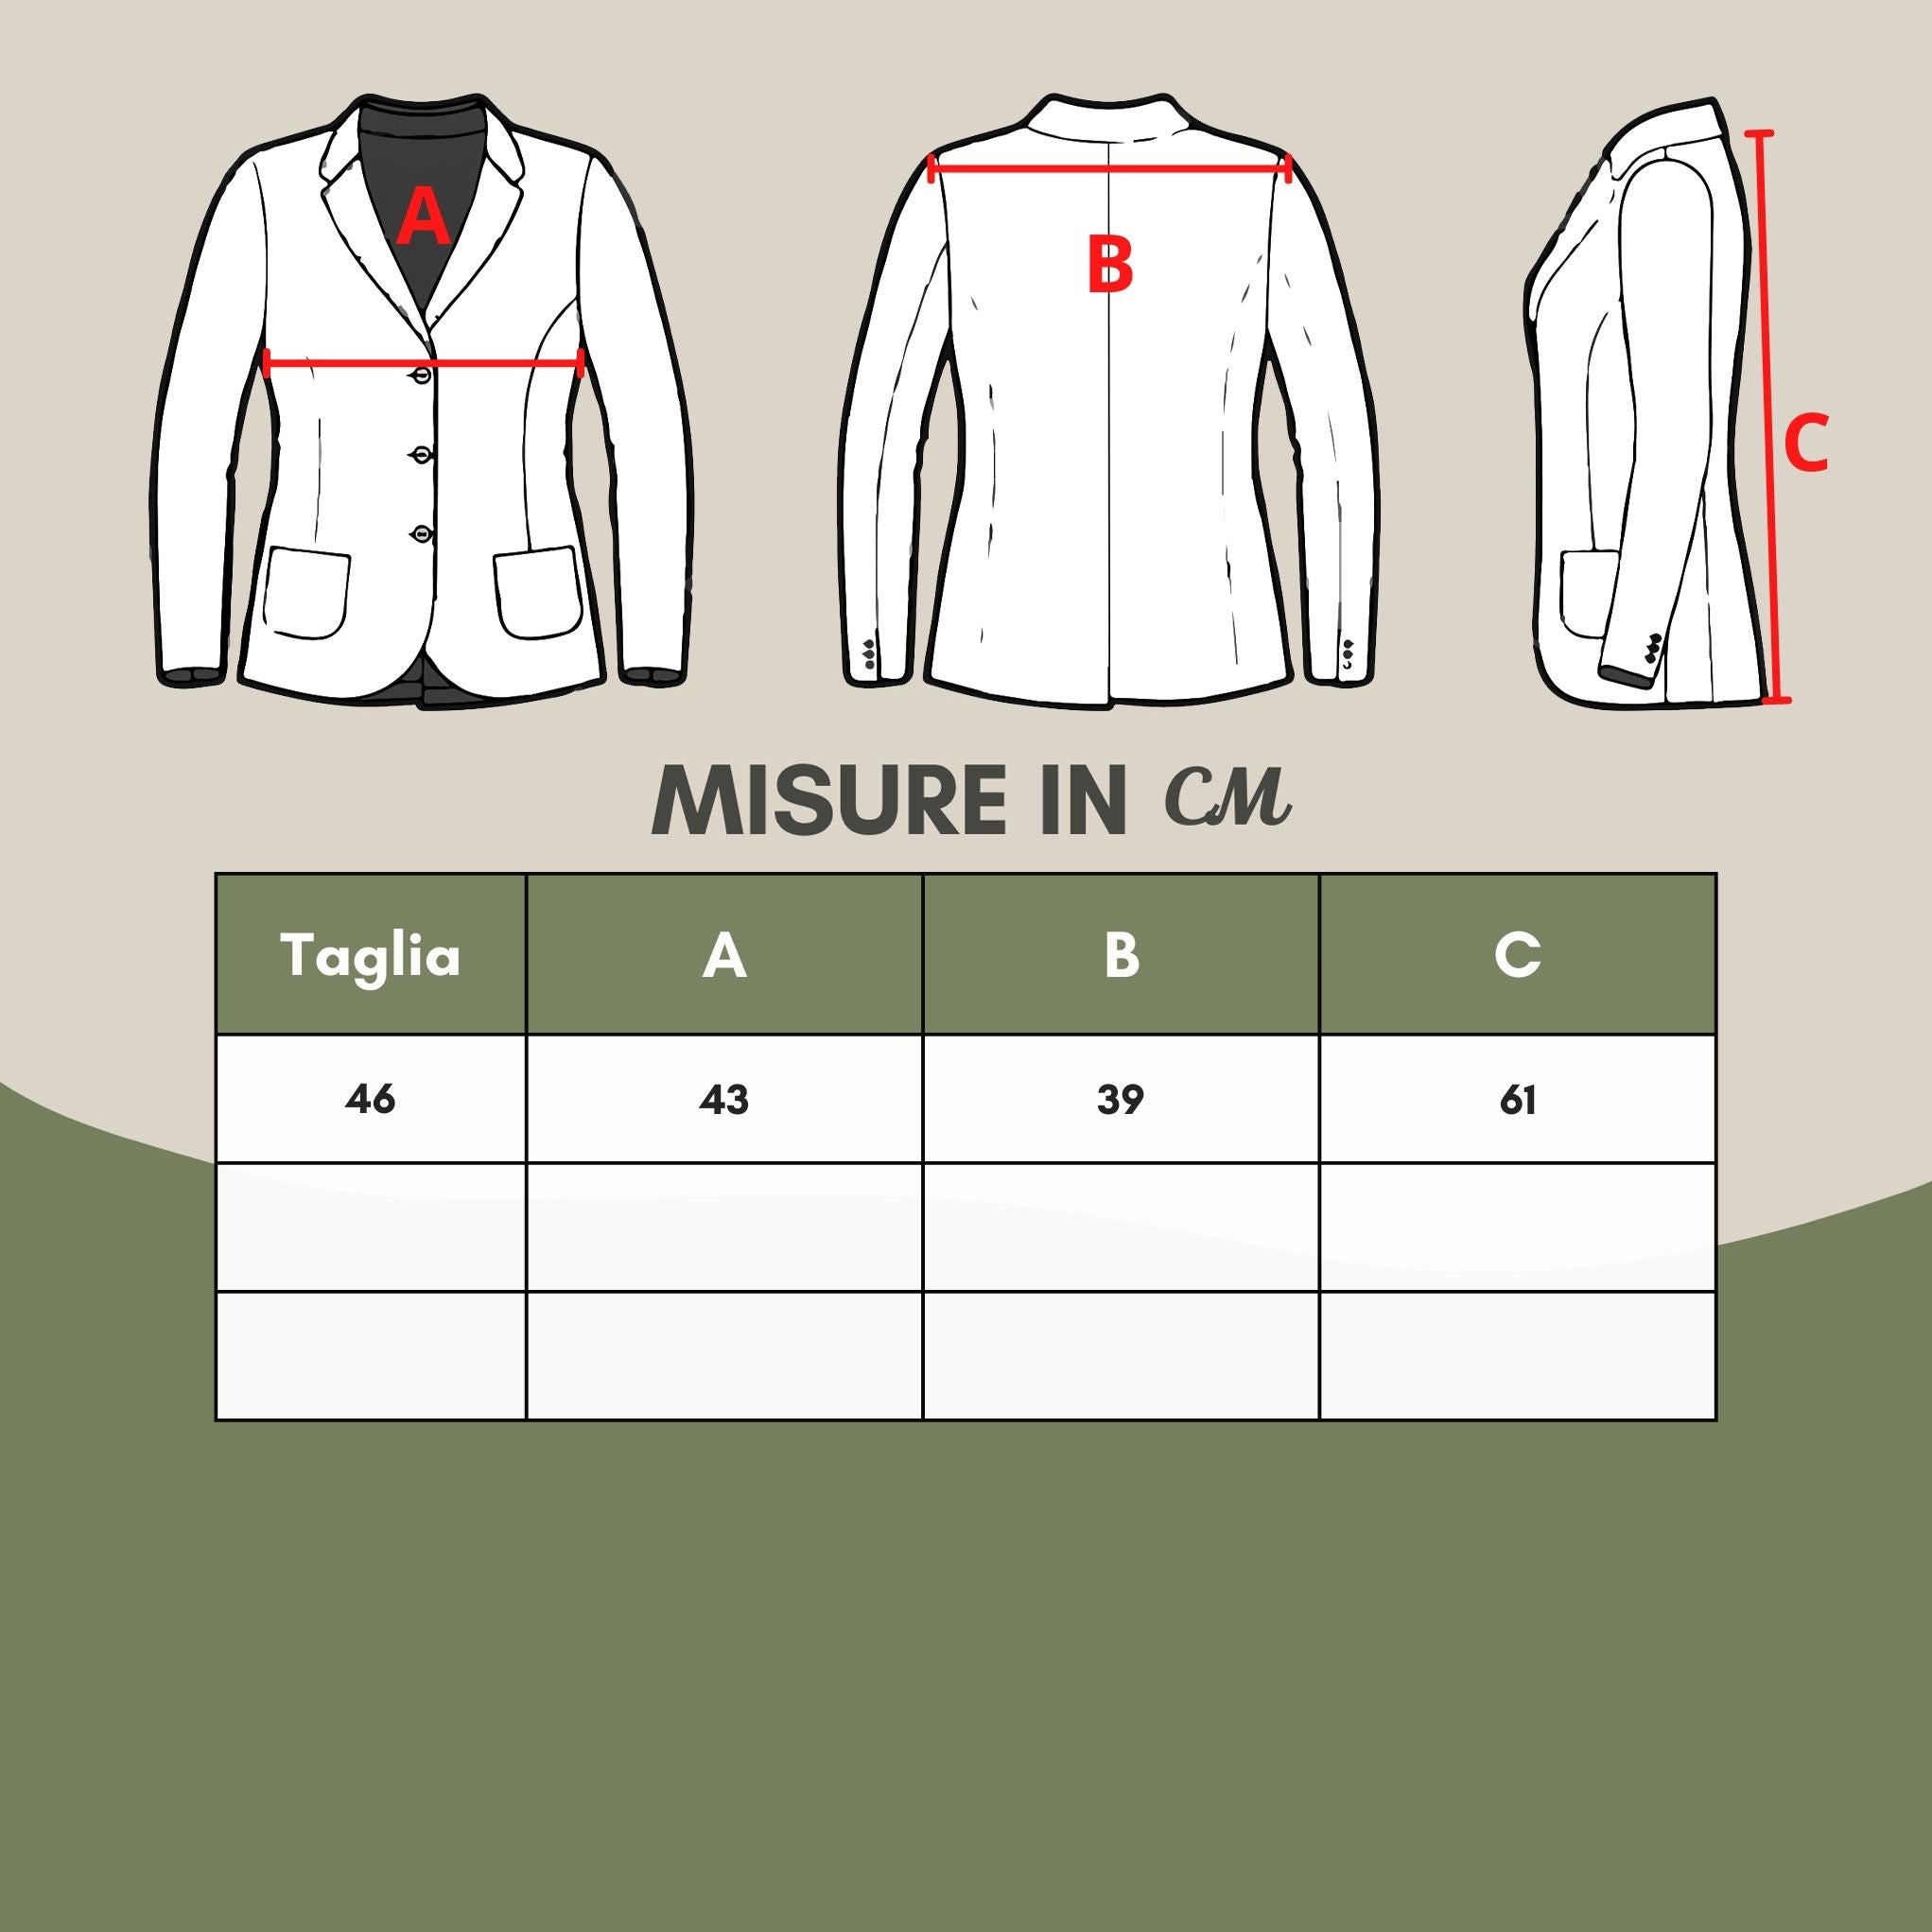 Lardini Grey Pinstripe Wool Jacket - Fizigo